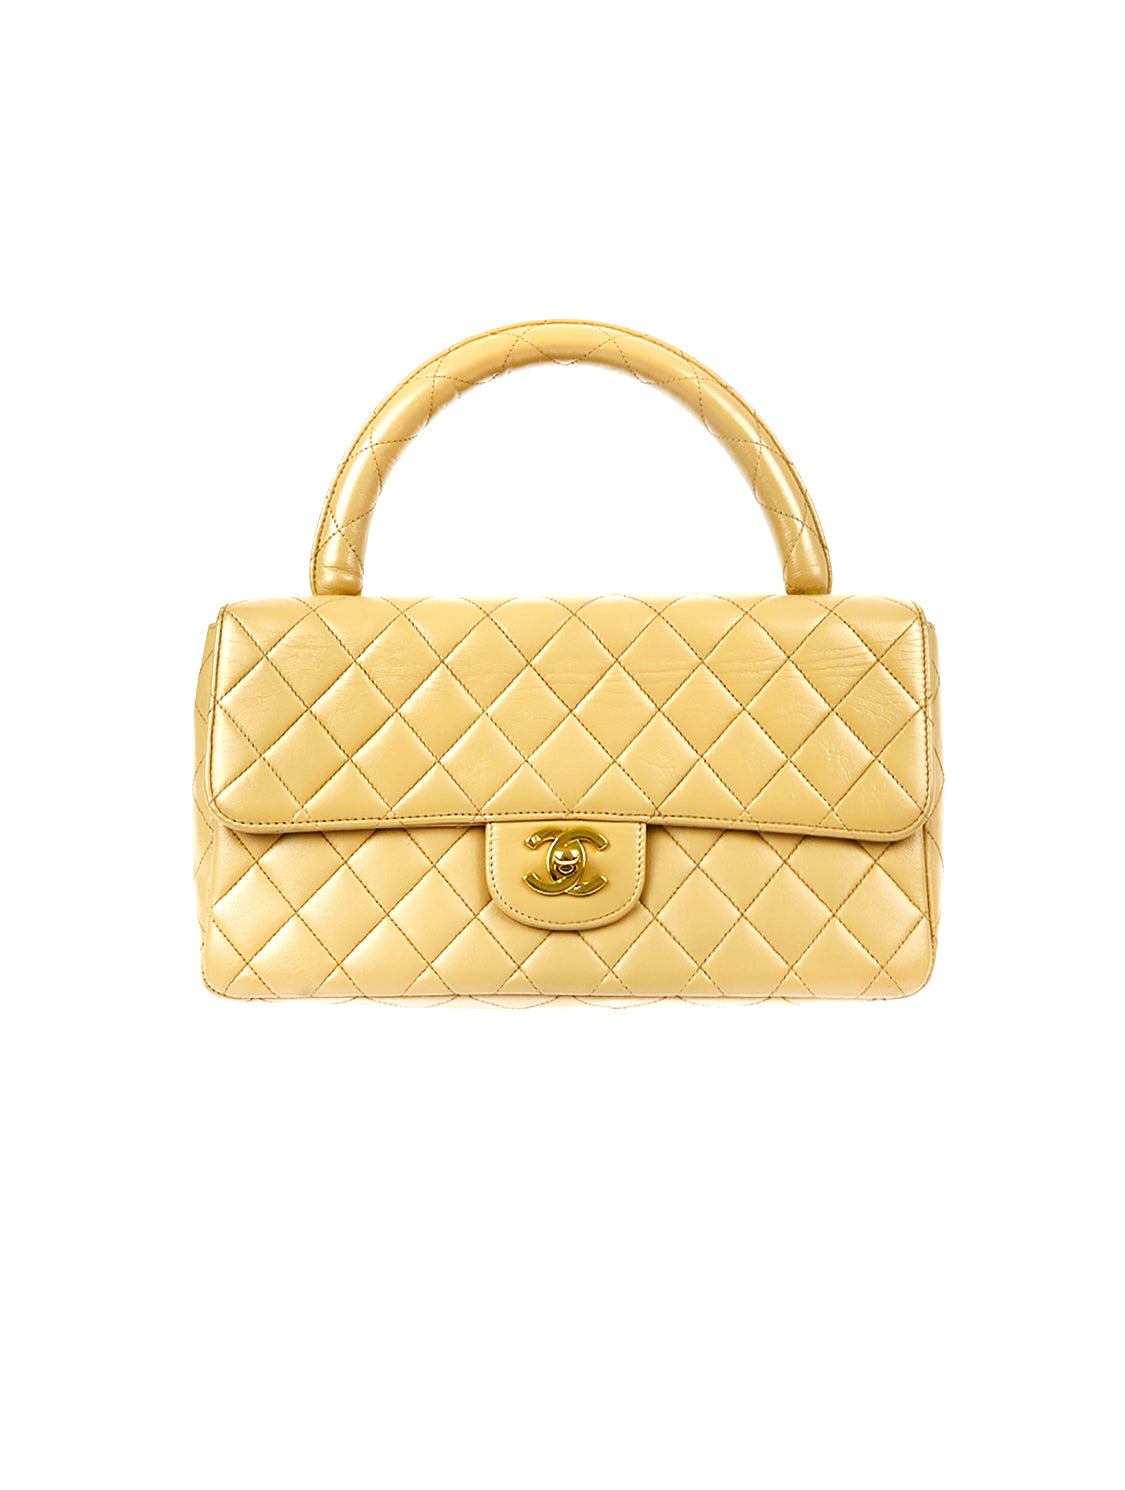 CHANEL, Bags, Rare New Chanel Mademoiselle Vintage Handbag